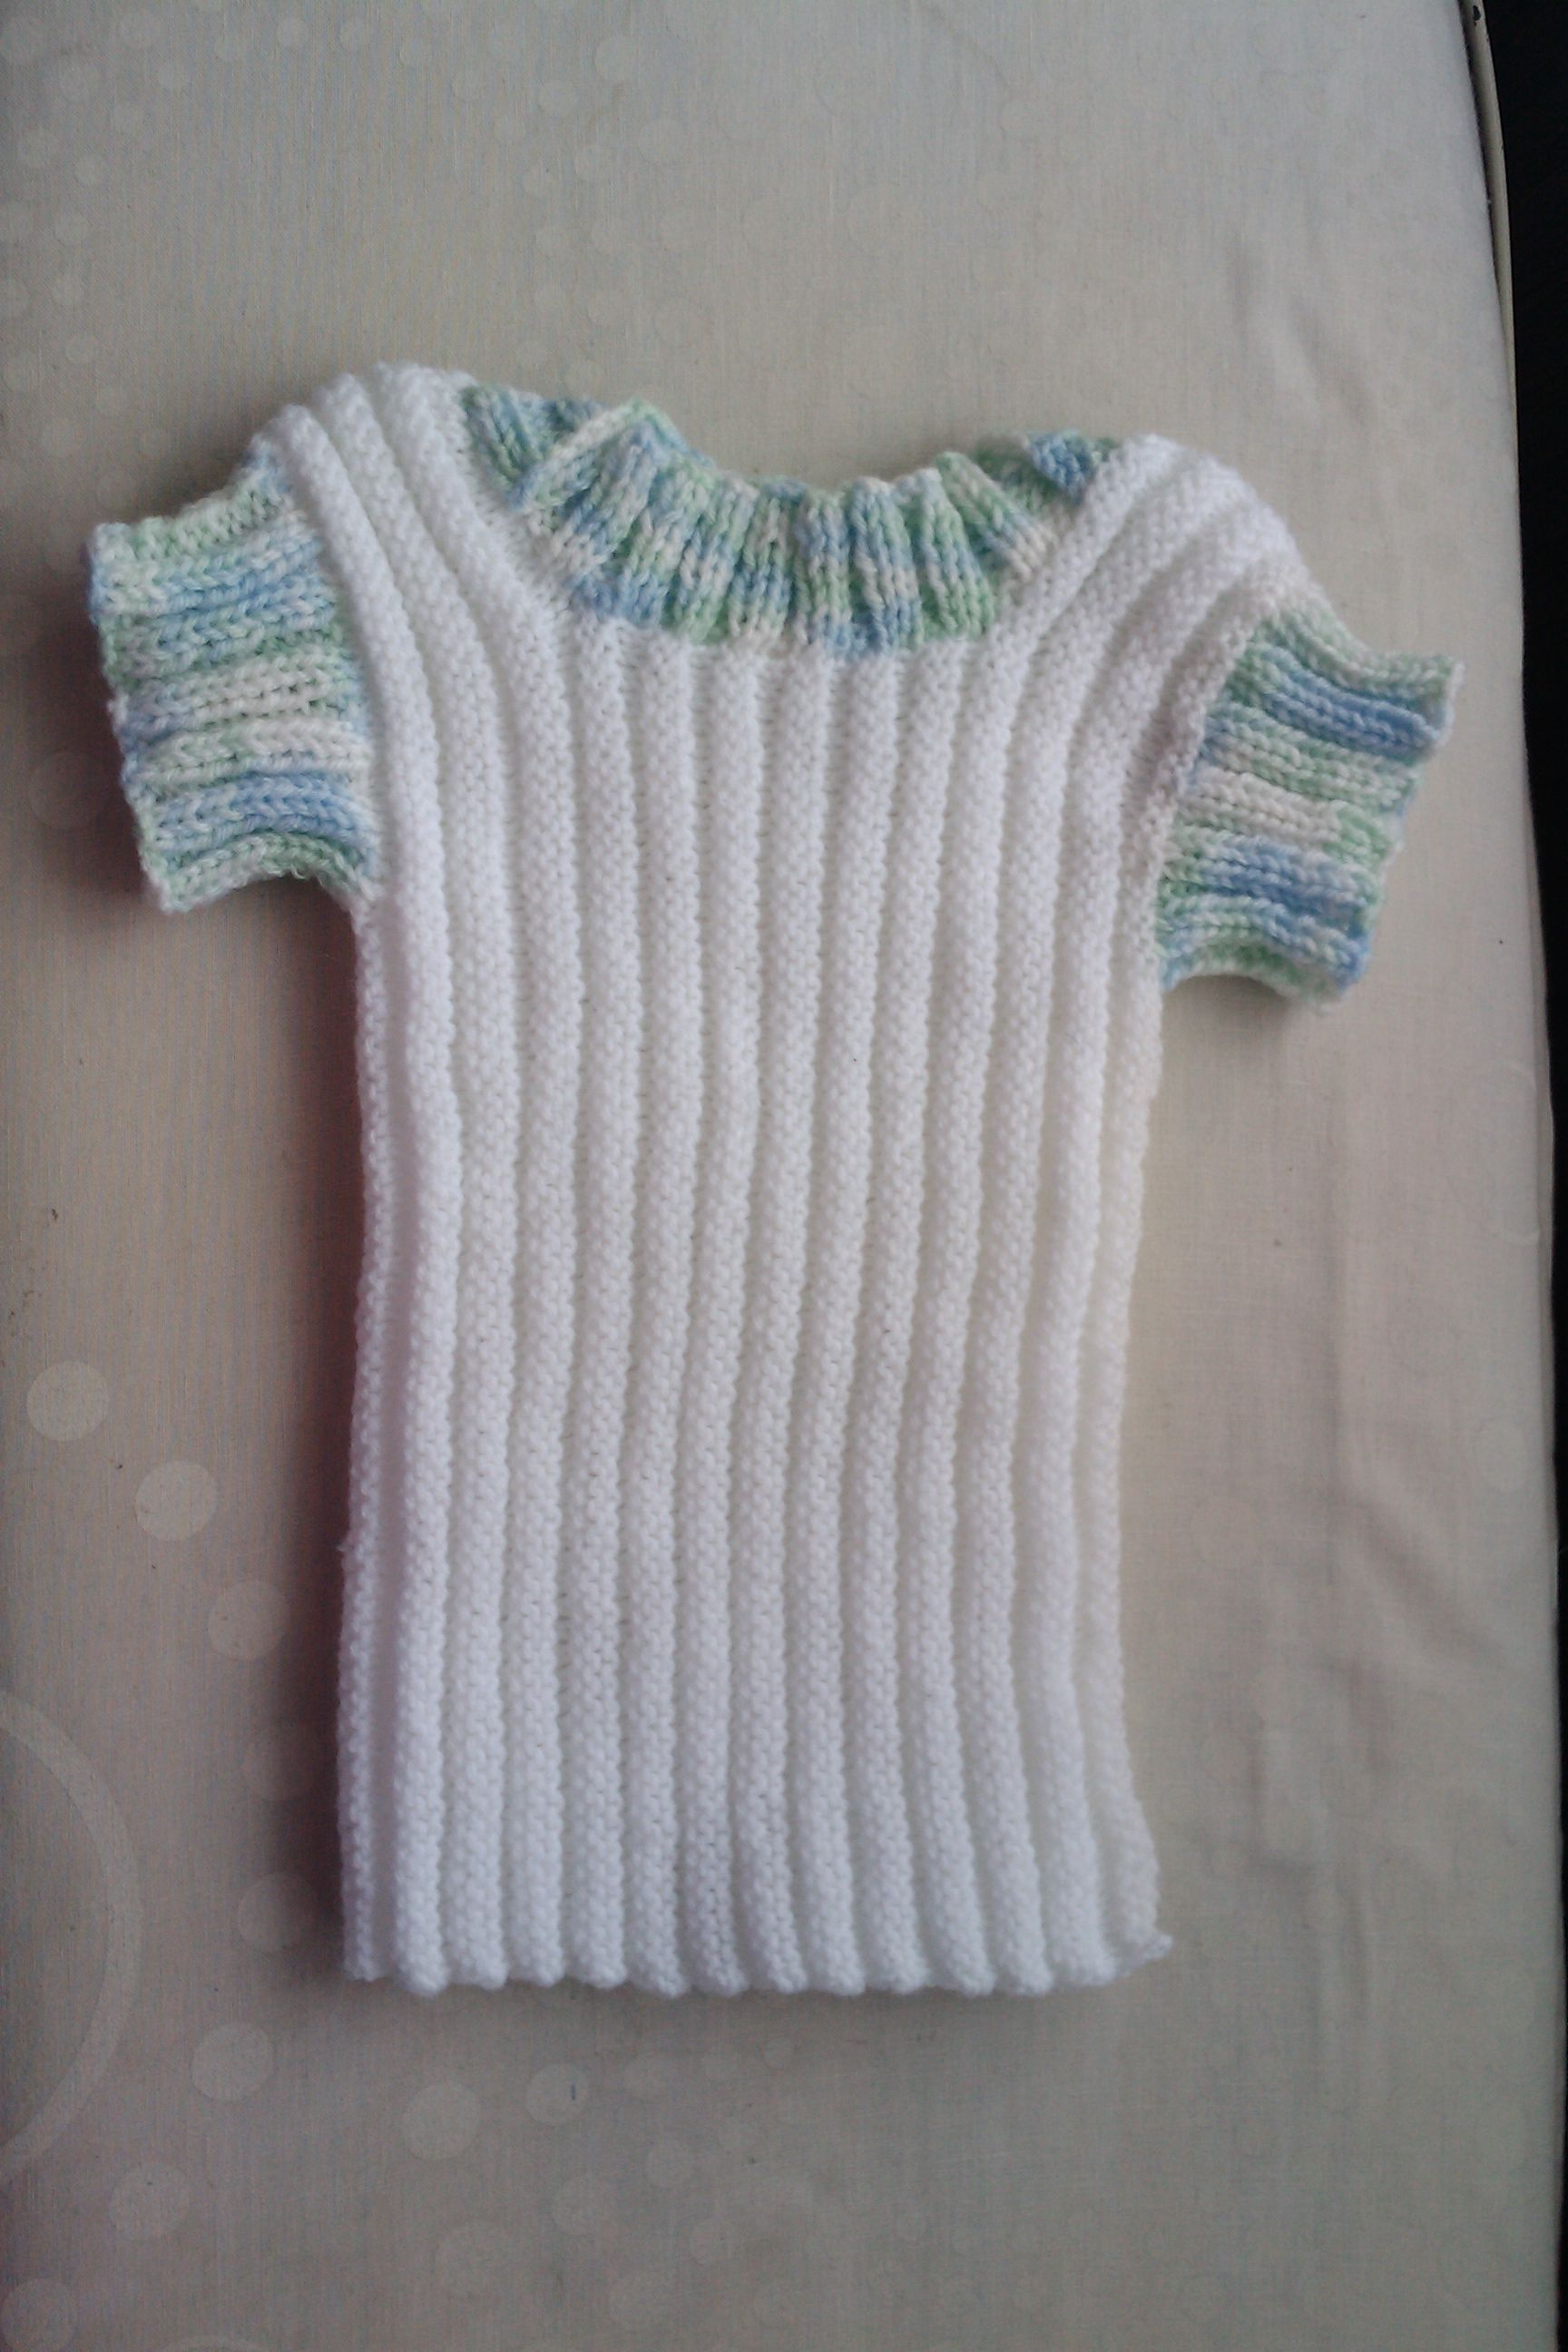 Crochet Baby Singlet Pattern 2014 Knitted For Charity Ba